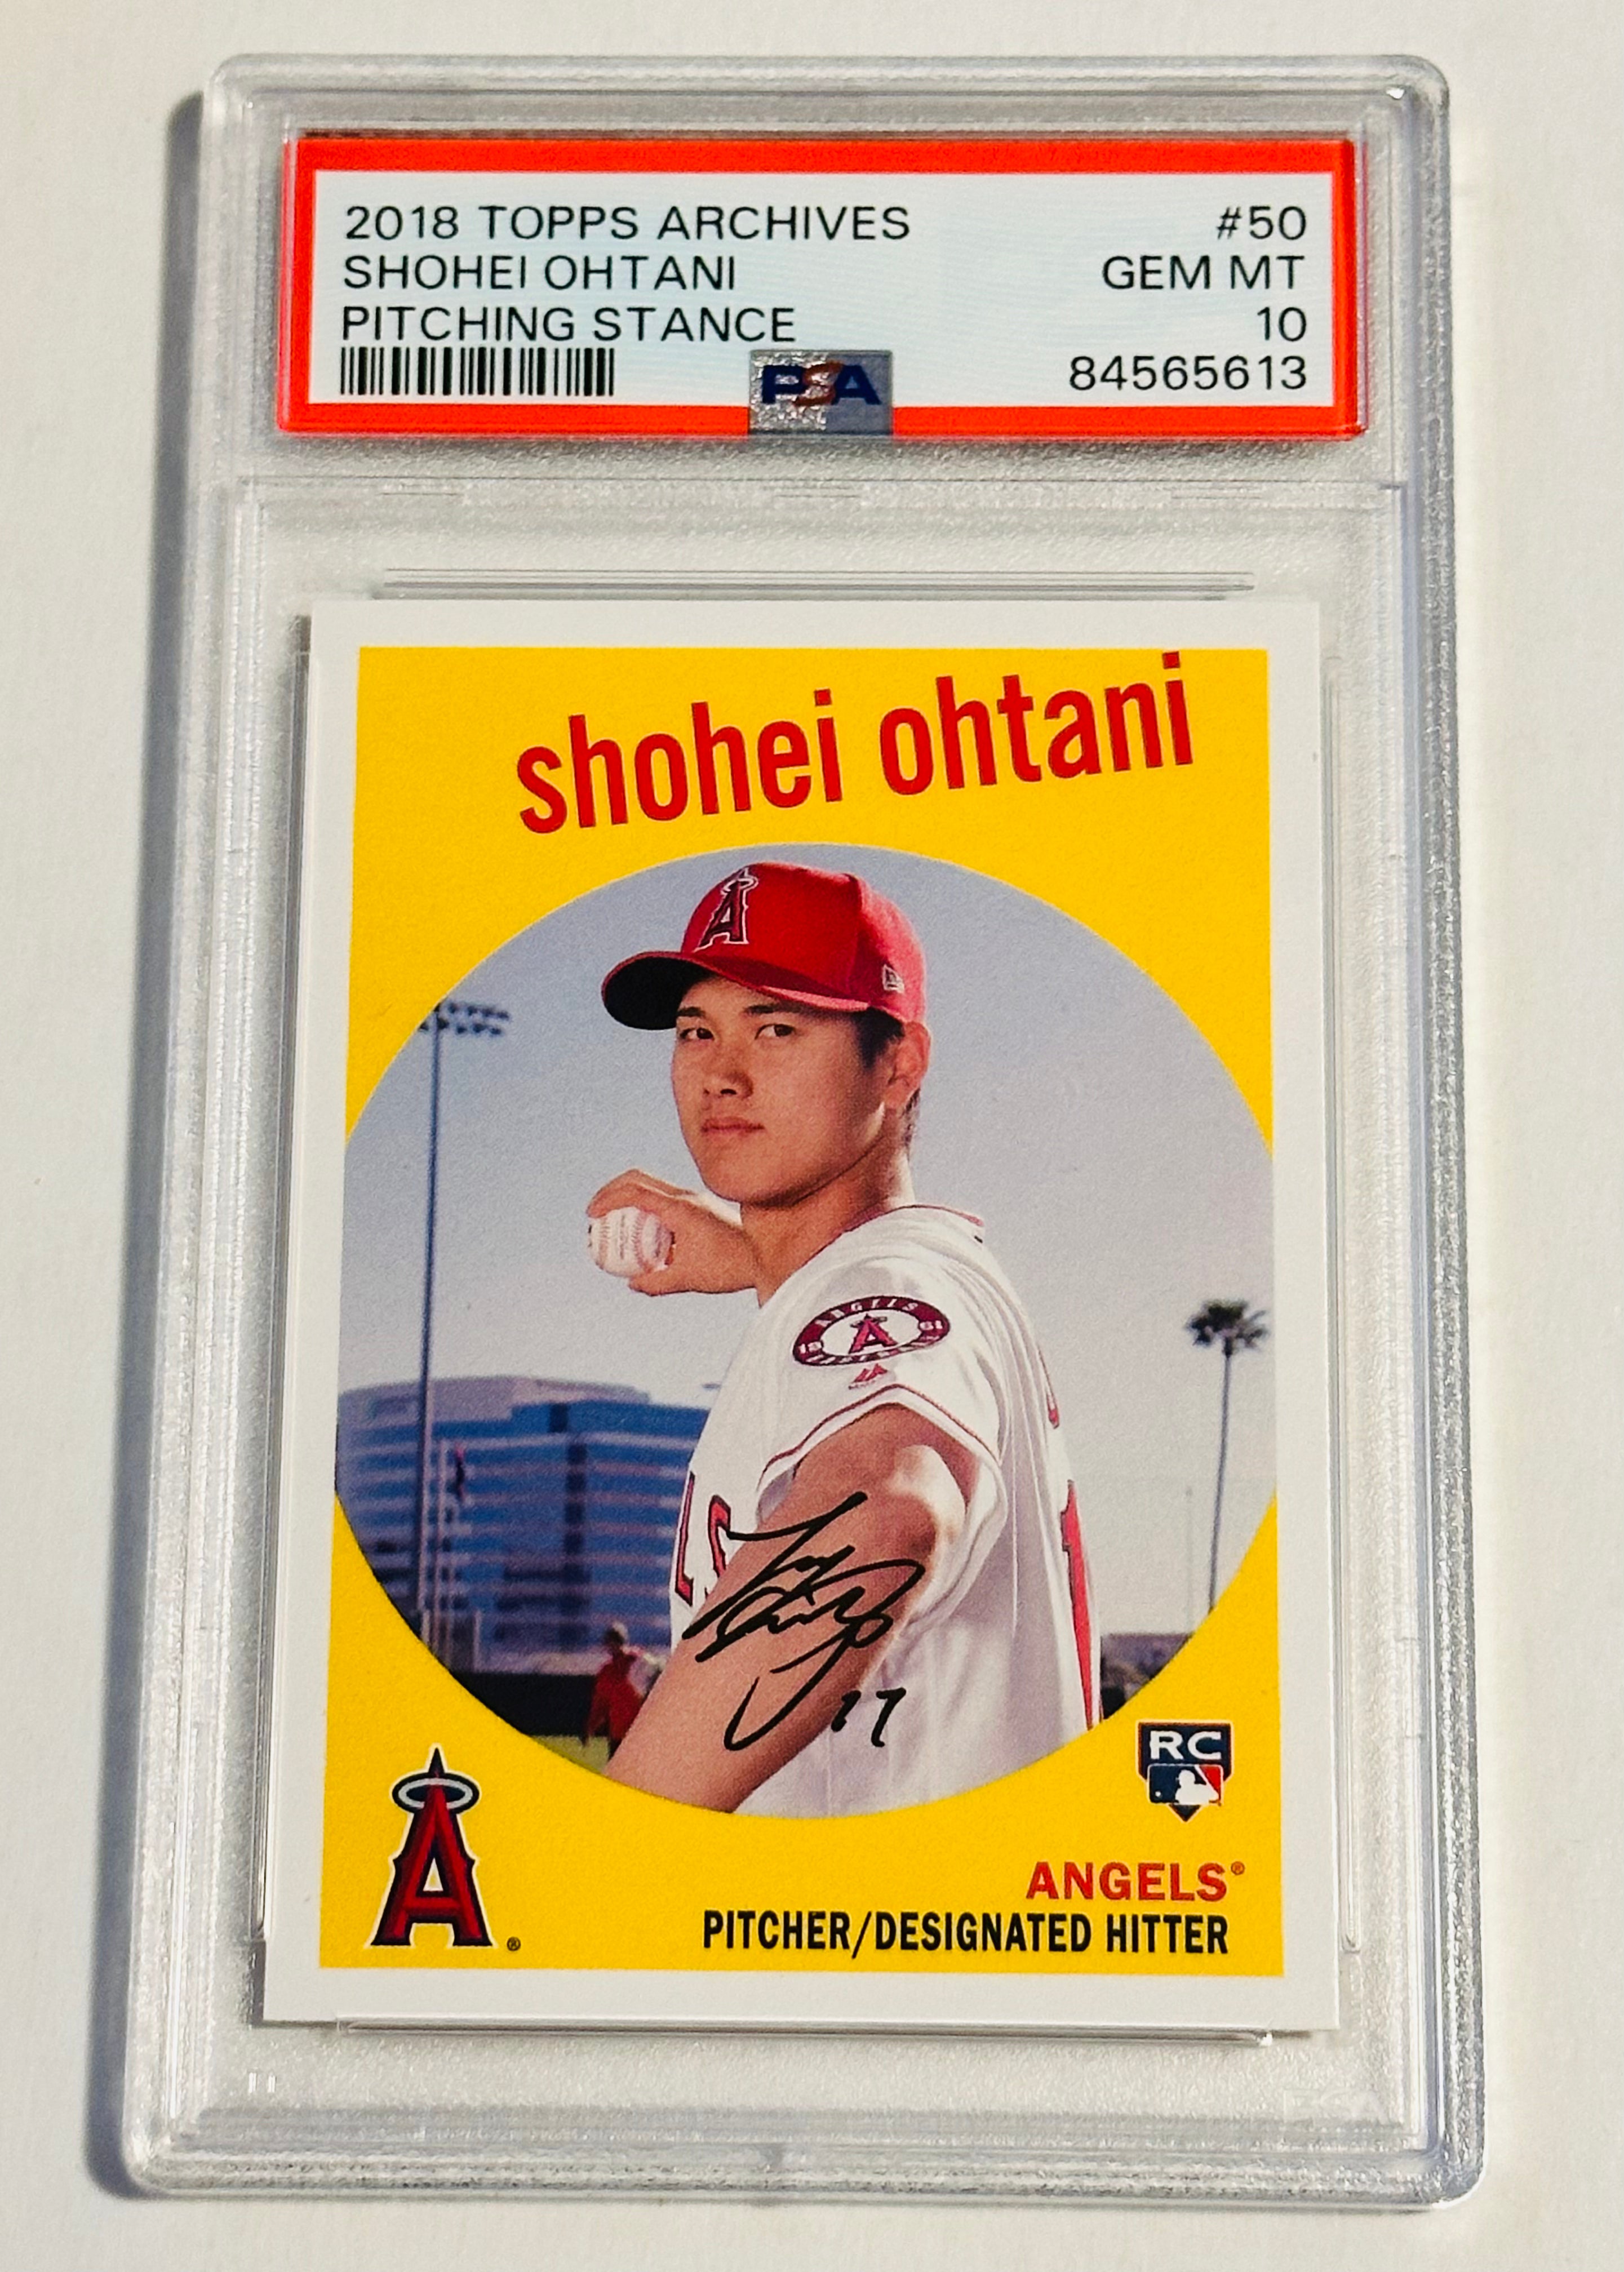 Shohei Ohtani Topps Archives baseball PSA 10 high grade rookie card 2018